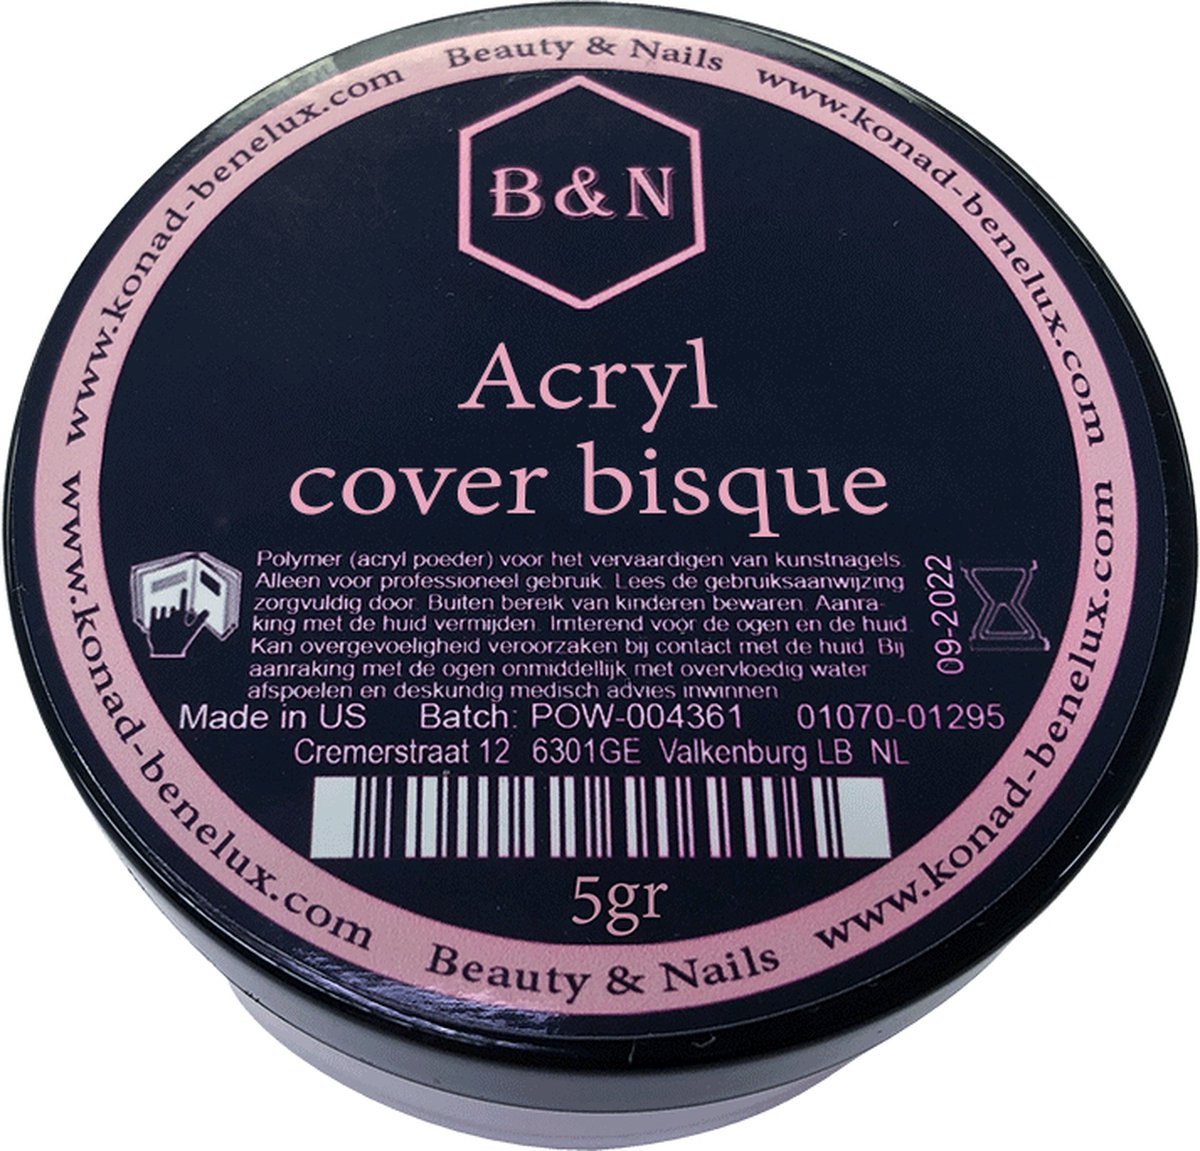 Acryl - cover bisque - 5 gr | B&N - acrylpoeder - VEGAN - acrylpoeder